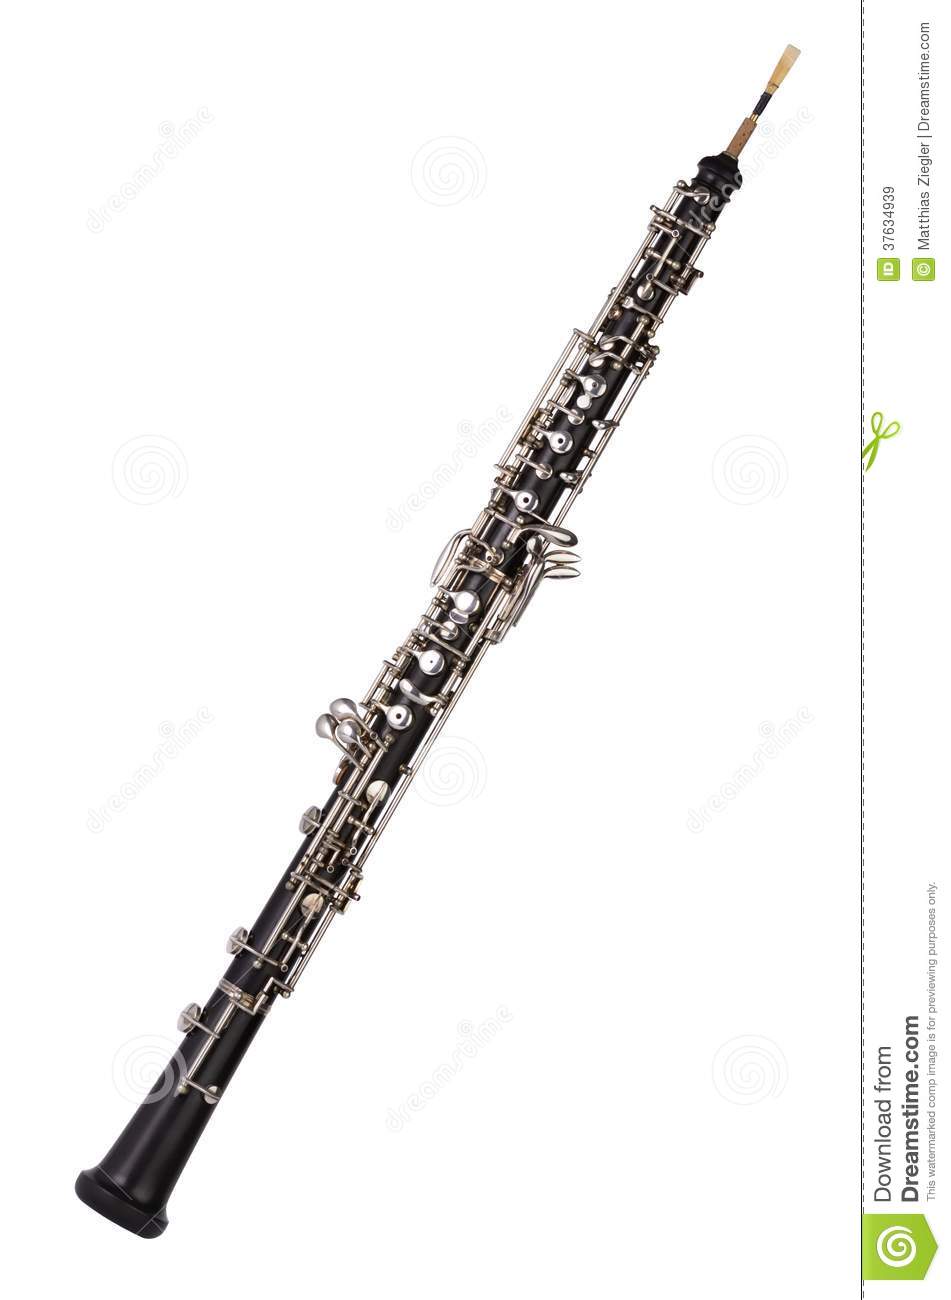 Oboe On White Background Royalty Free Stock Images   Image  37634939